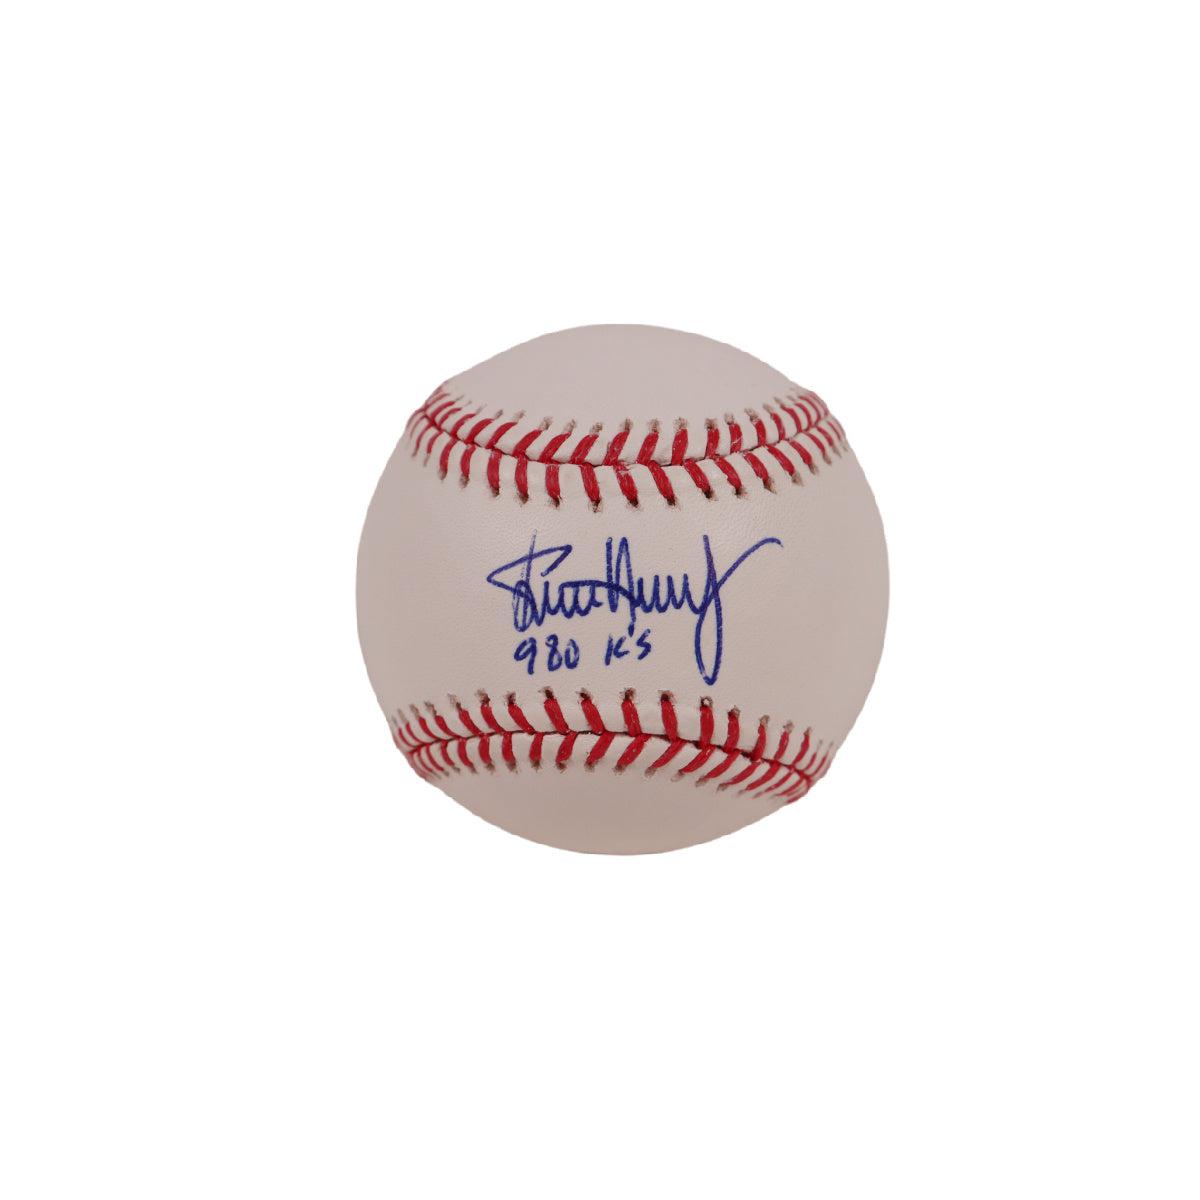 STEVE AVERY Atlanta Braves Signed ROMLB Baseball Autographed JSA COA